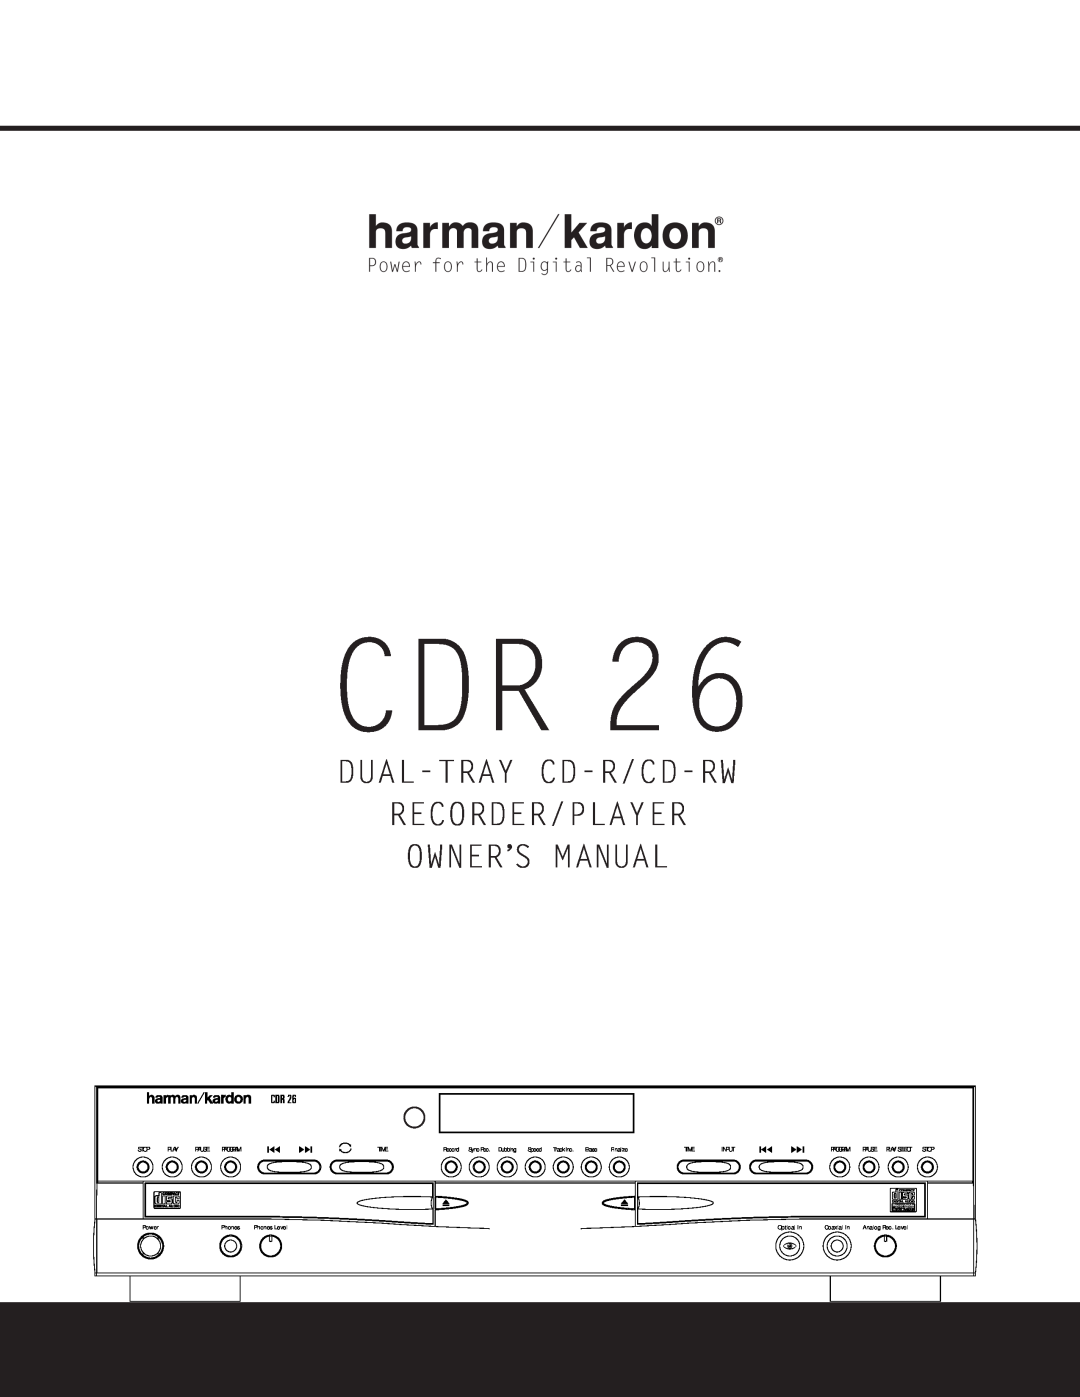 Harman-Kardon CDR 26 owner manual Dual-Tray Cd-R/Cd-Rw Recorder/Player, Power for the Digital Revolution 